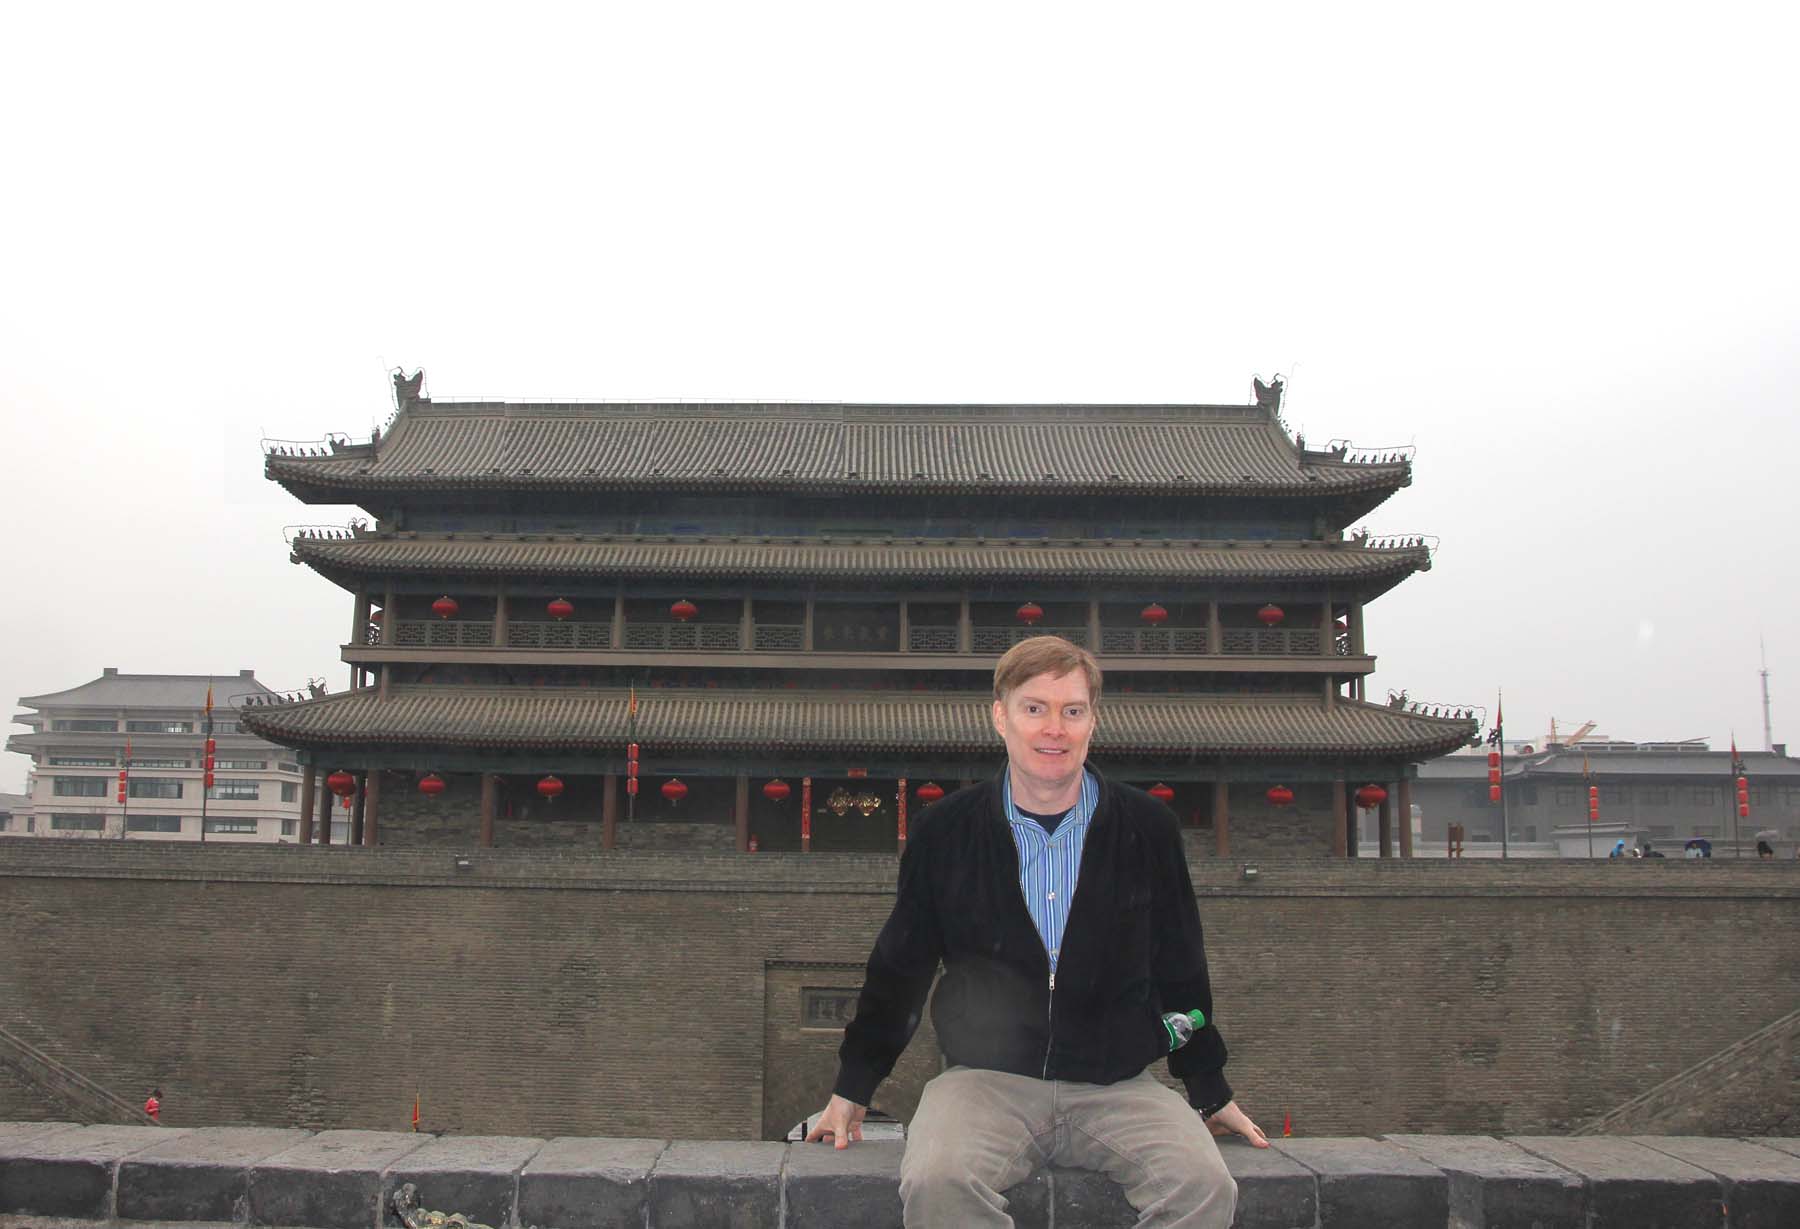 Me posing on the Xian city wall.